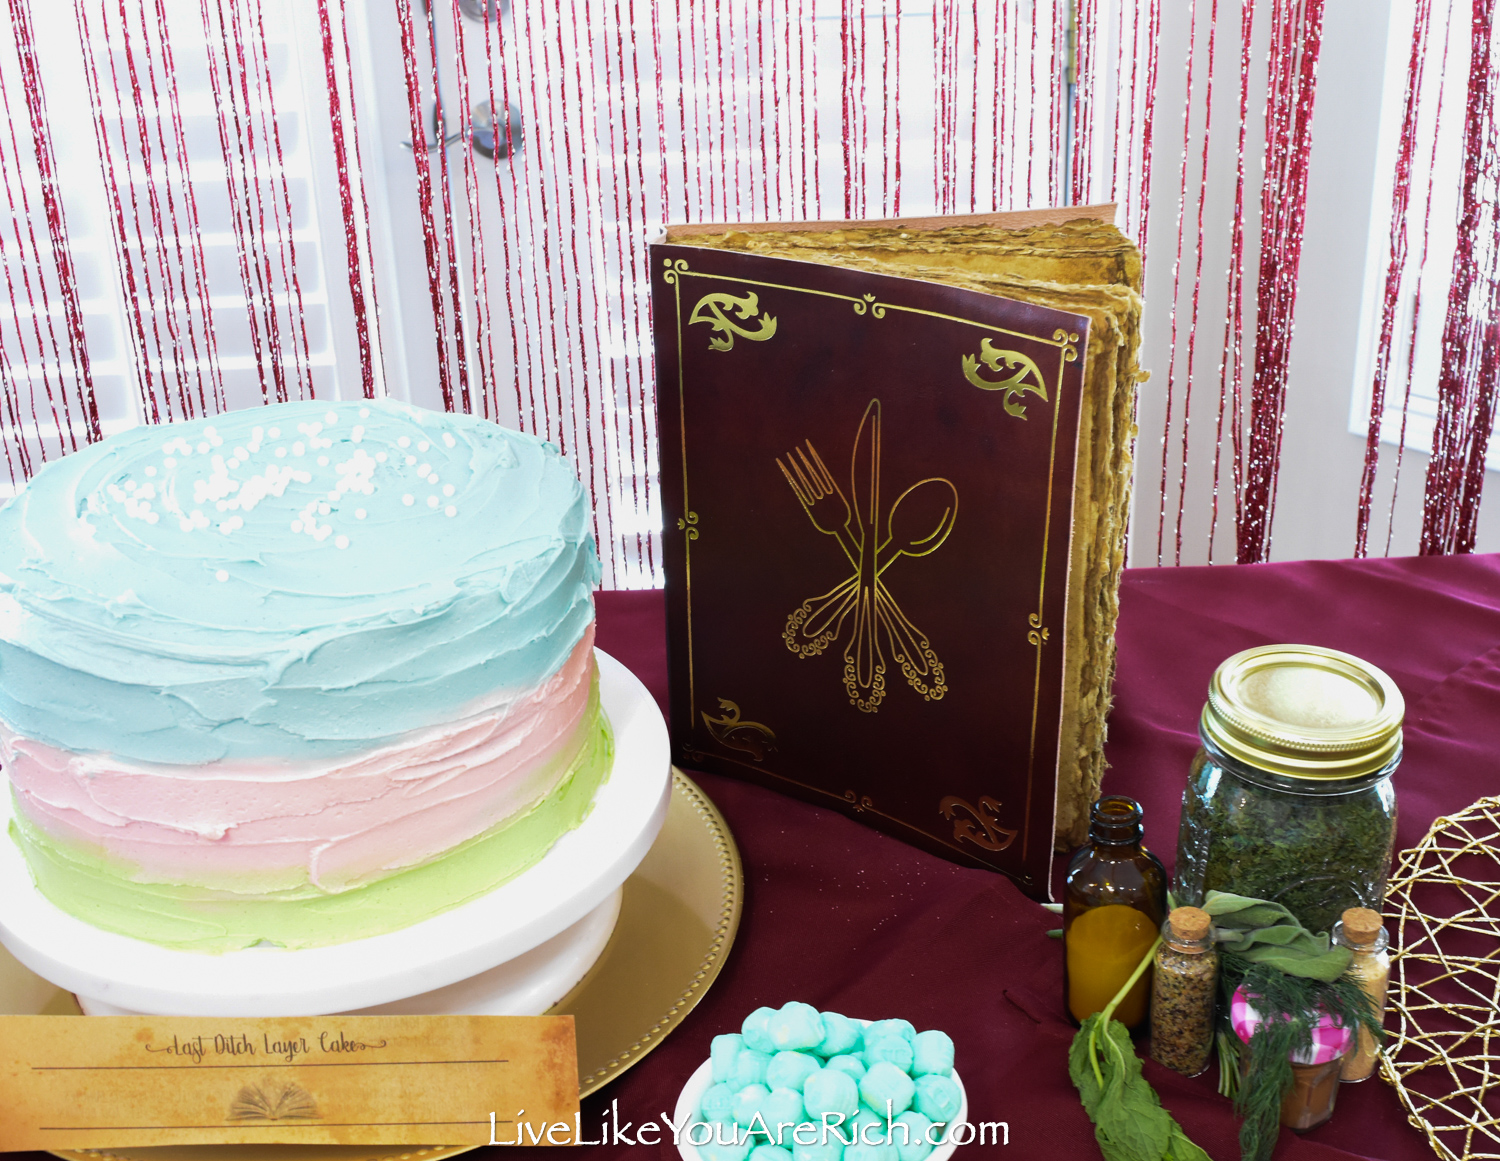 suarez-bakery-park-rd-charlotte-lavender-inverted-ruffle-cake-web-2048.jpg